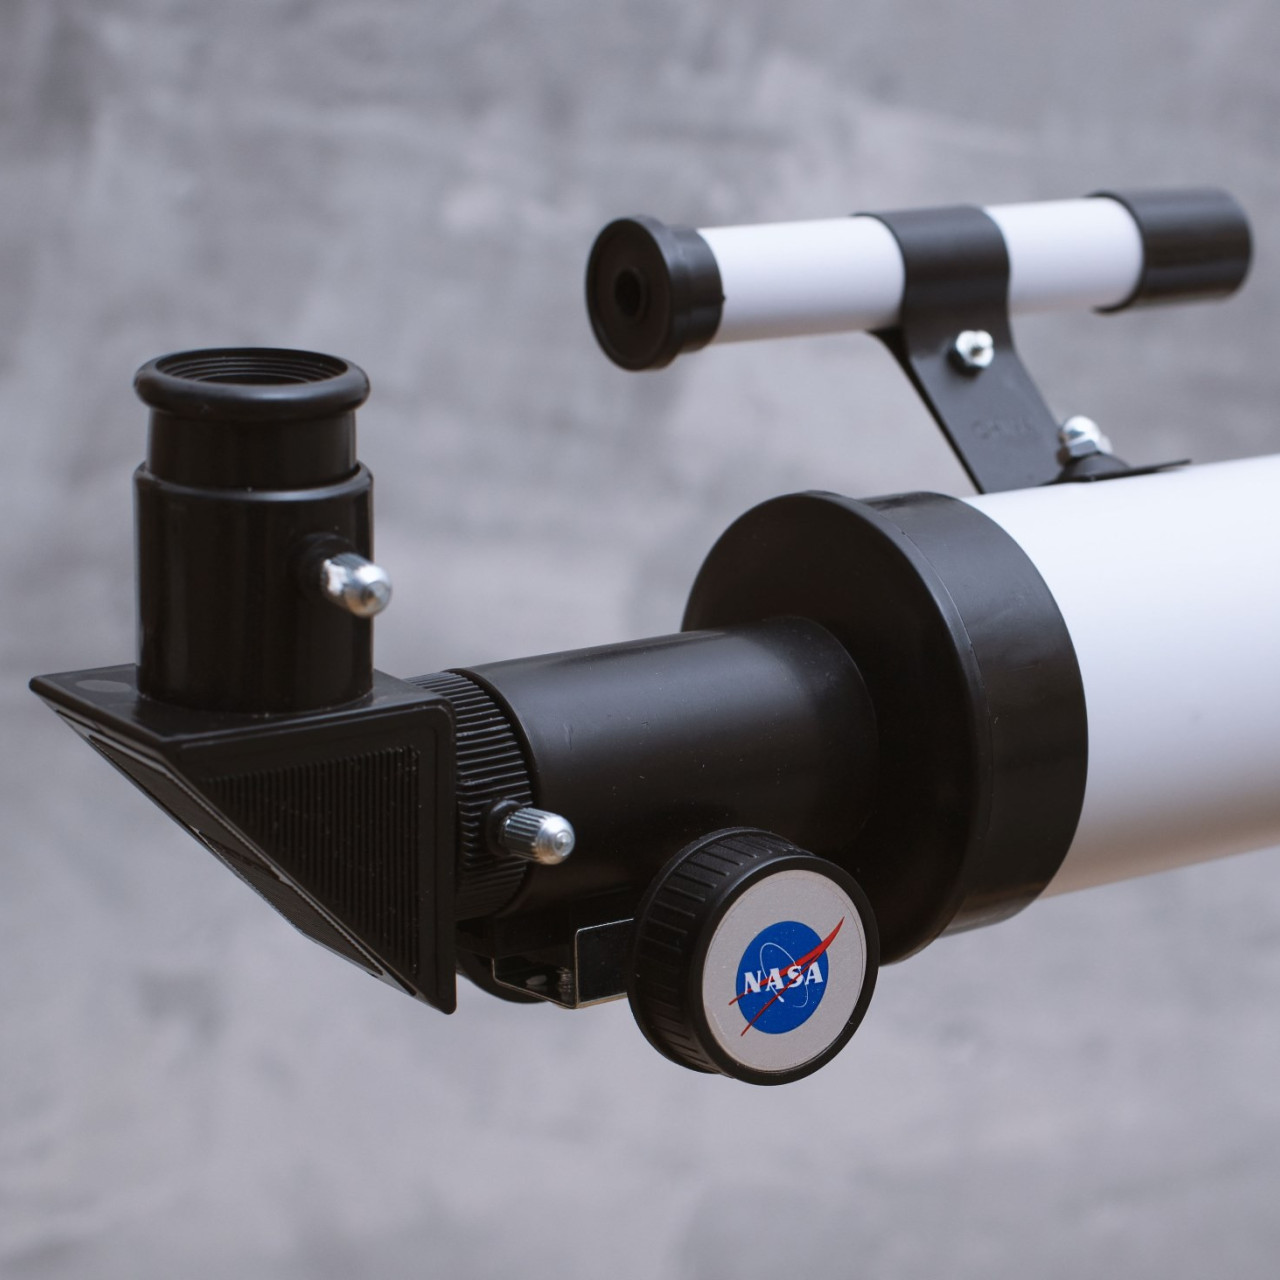 Telescope NASA (1002630)